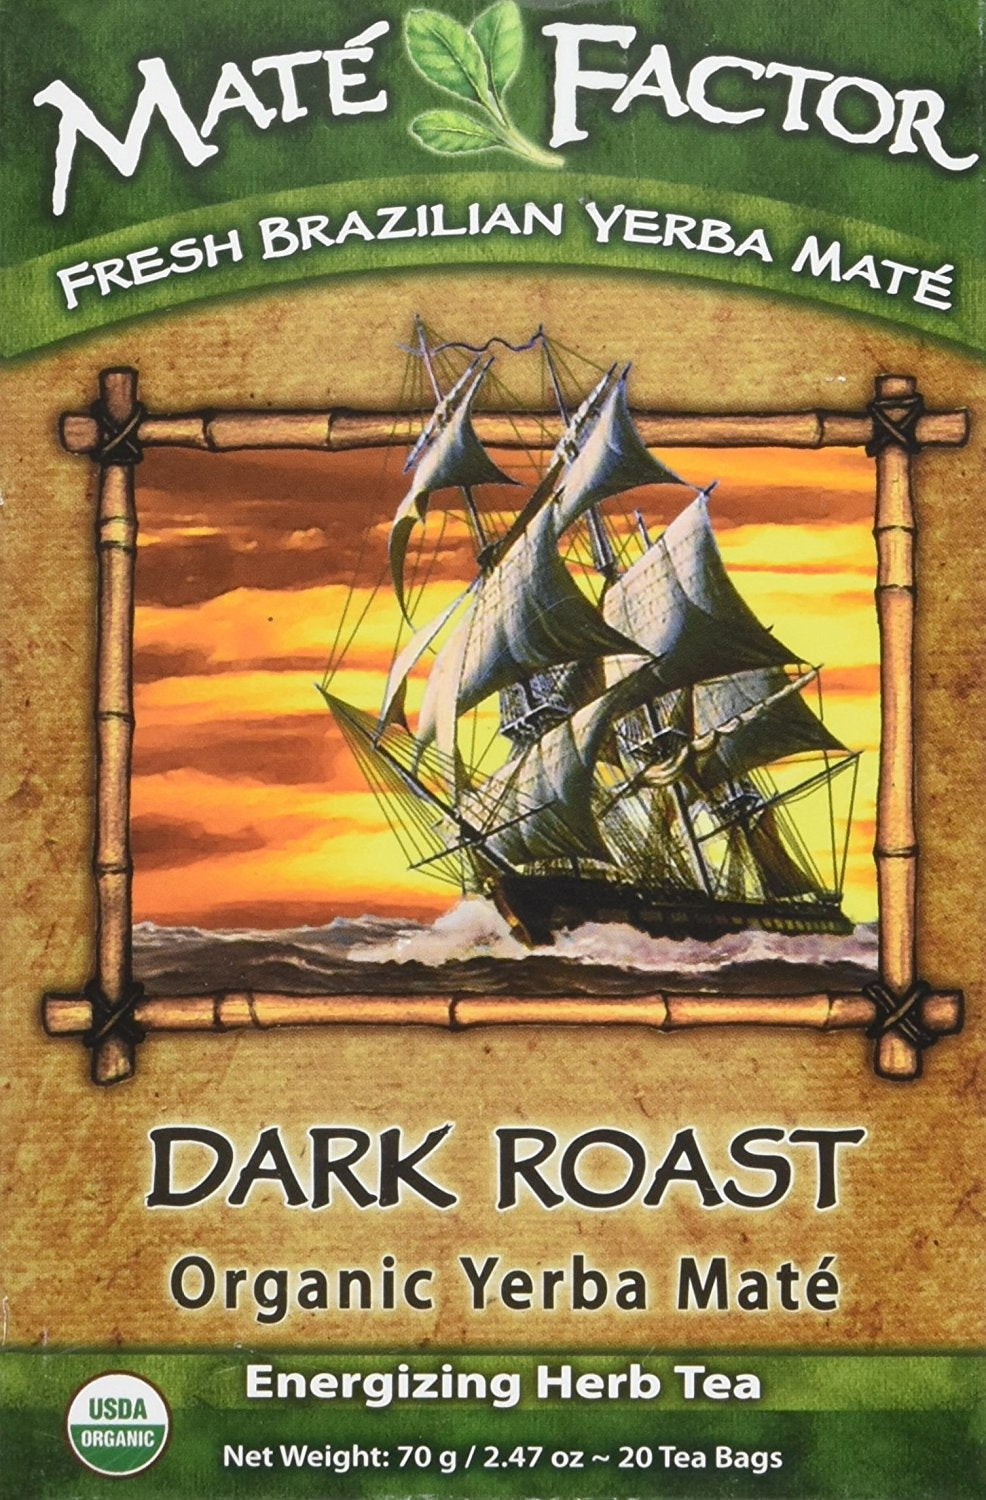 The Mate Factor Organic Yerba Mate Dark Roast -- 20 Tea Bags